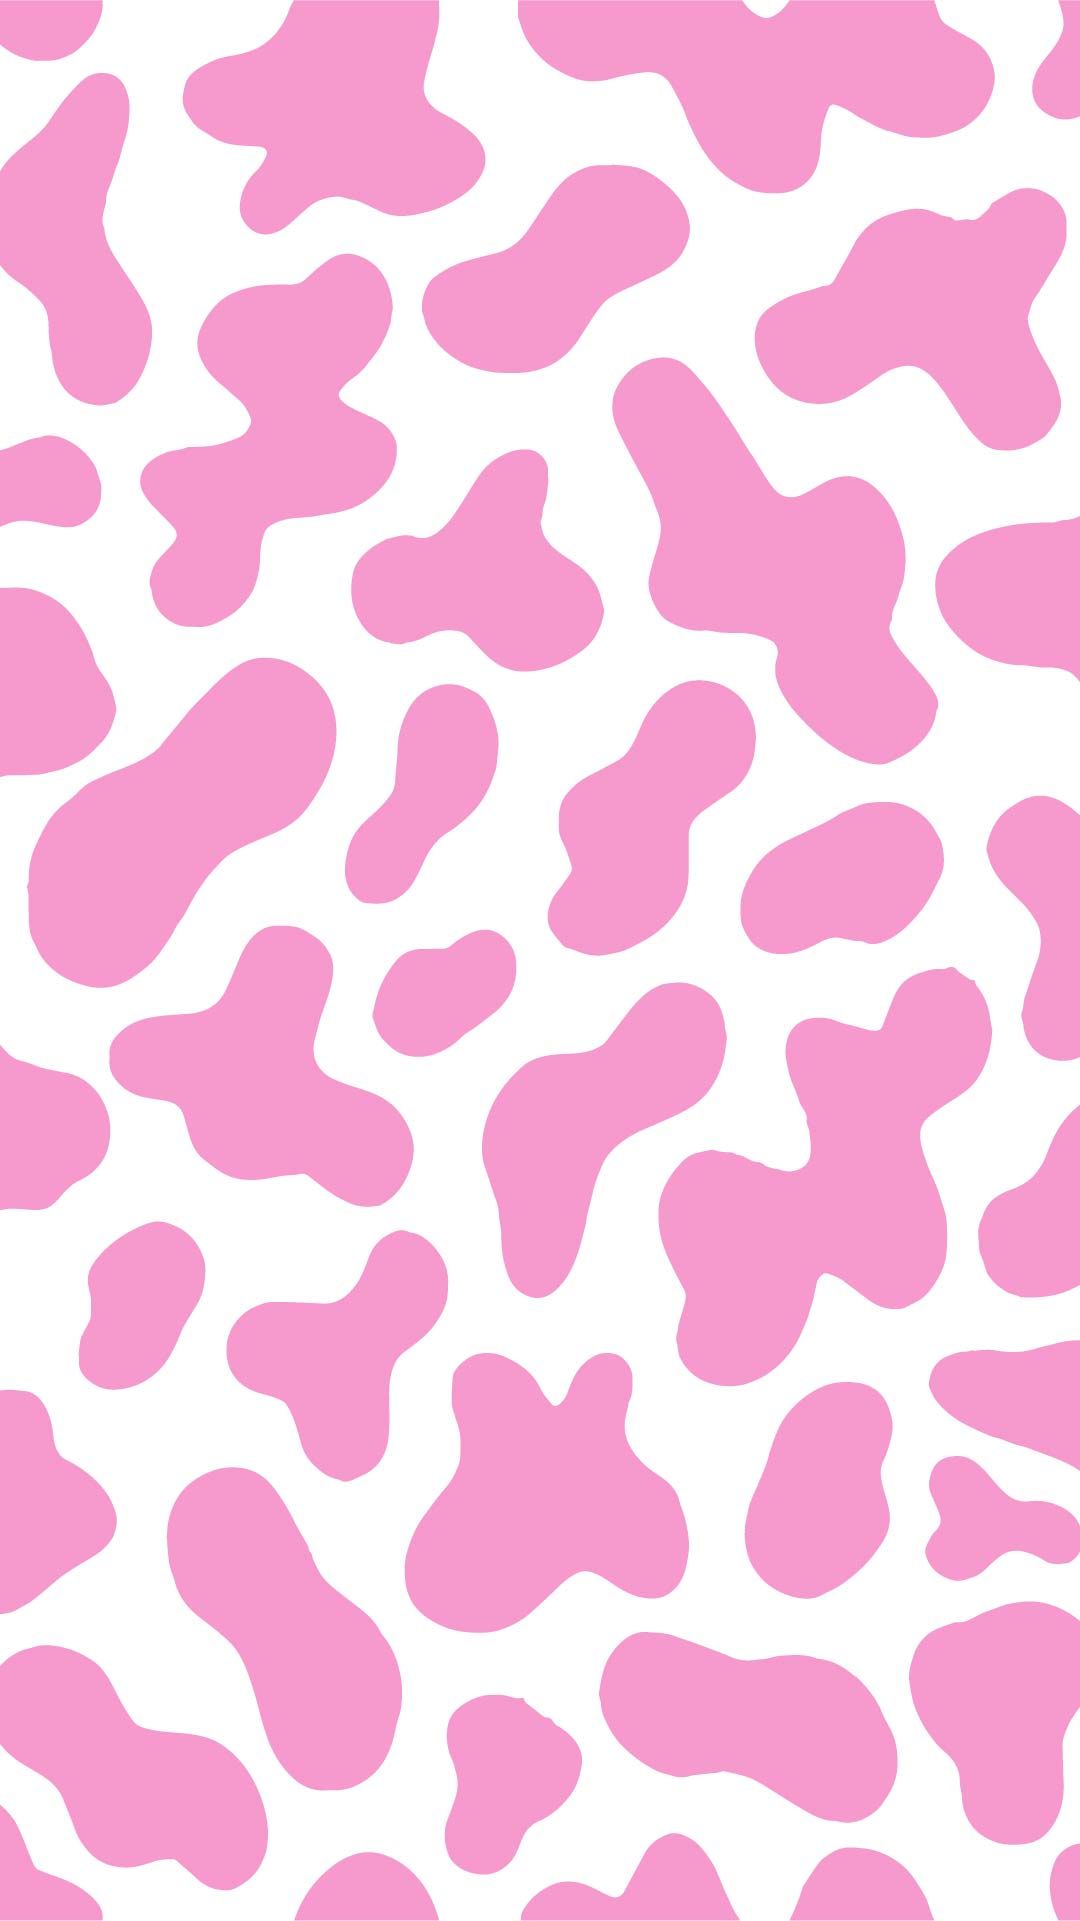 Aesthetic Pink Cow Print Wallpaper. Cow Print Wallpaper